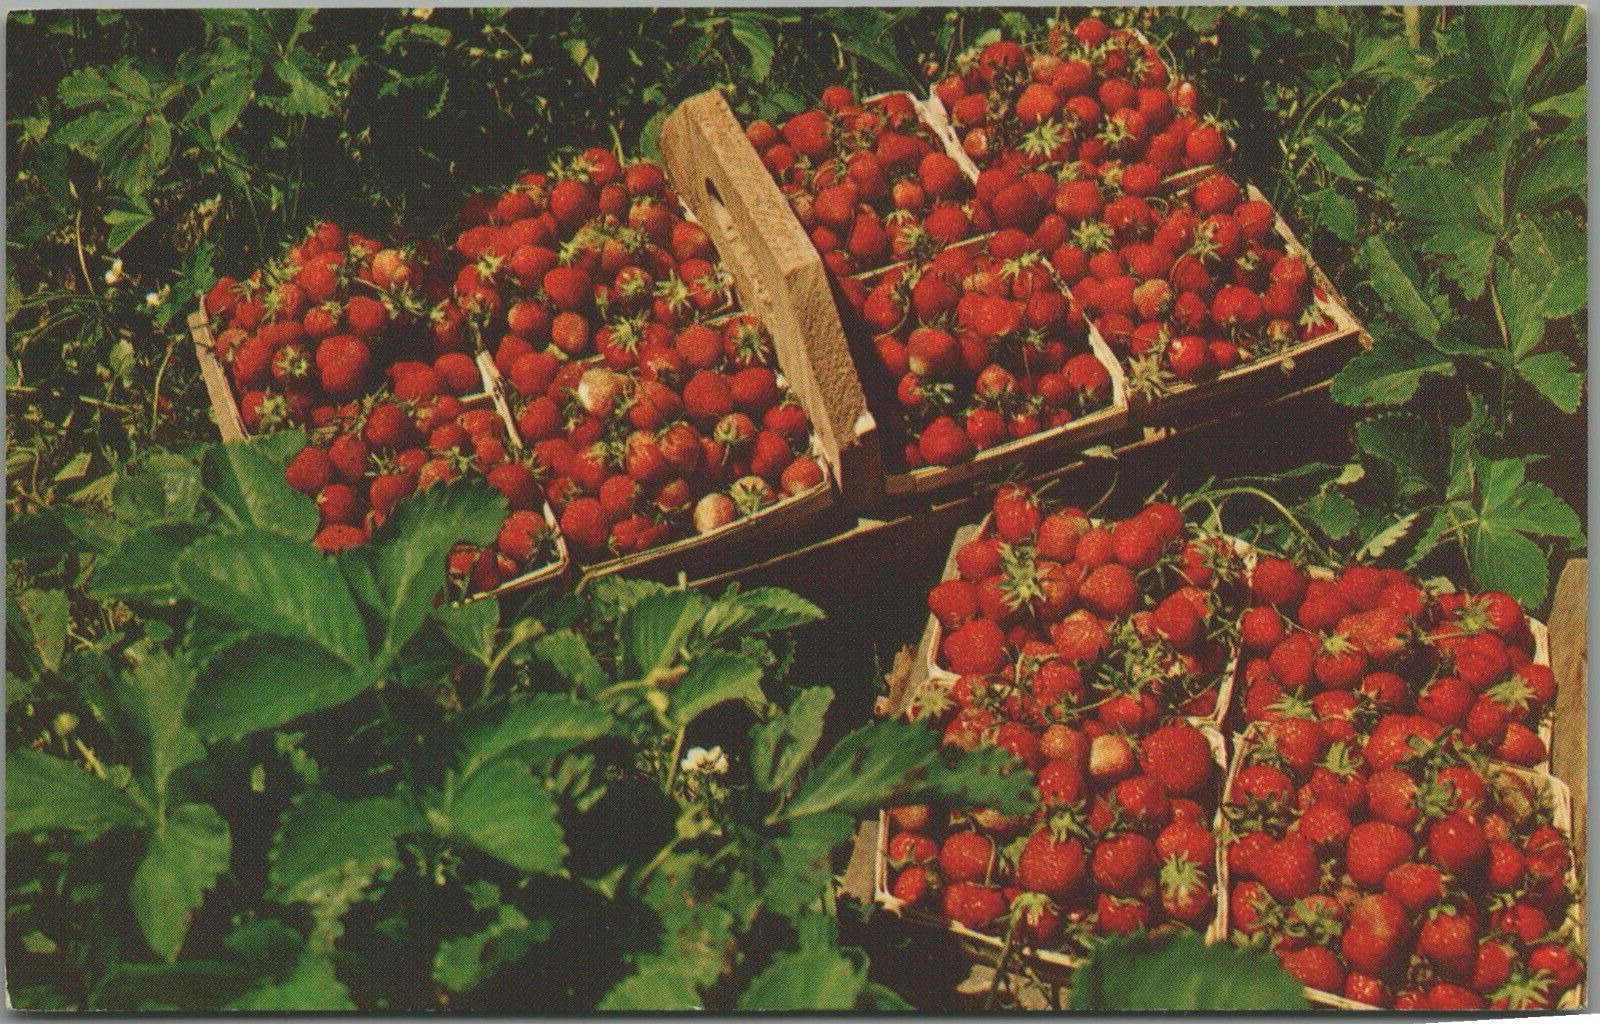 Gadsden First Strawberries in Tennessee